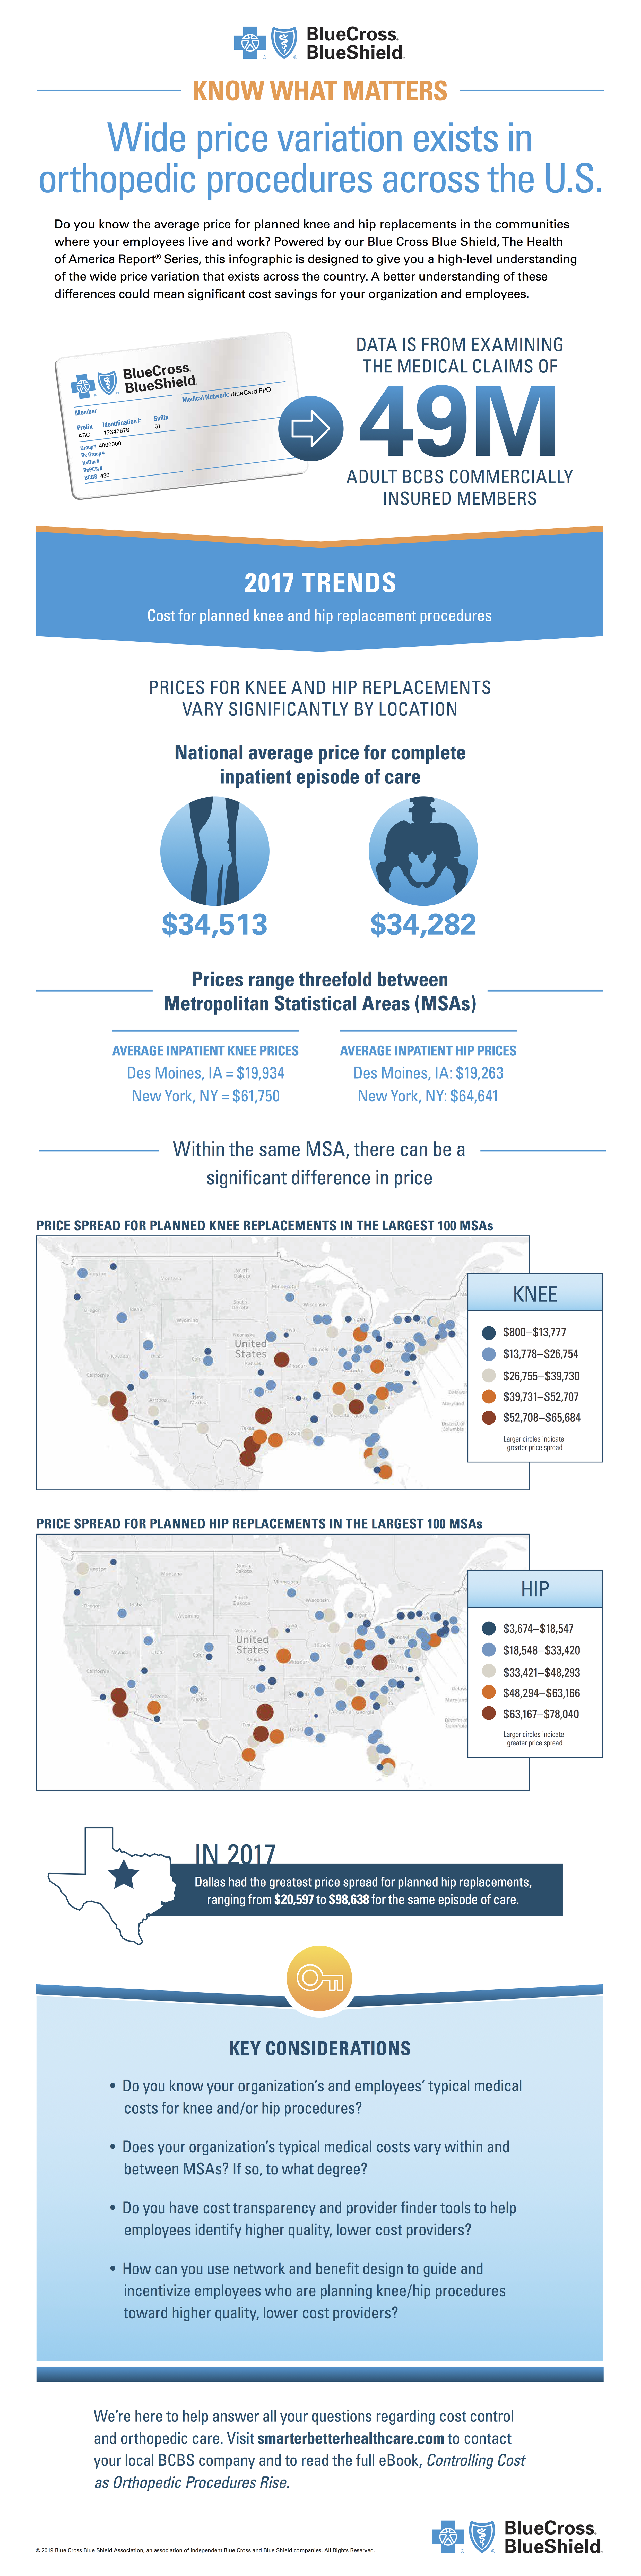 Wide price variation exists in orthopedic procedures across the U.S.